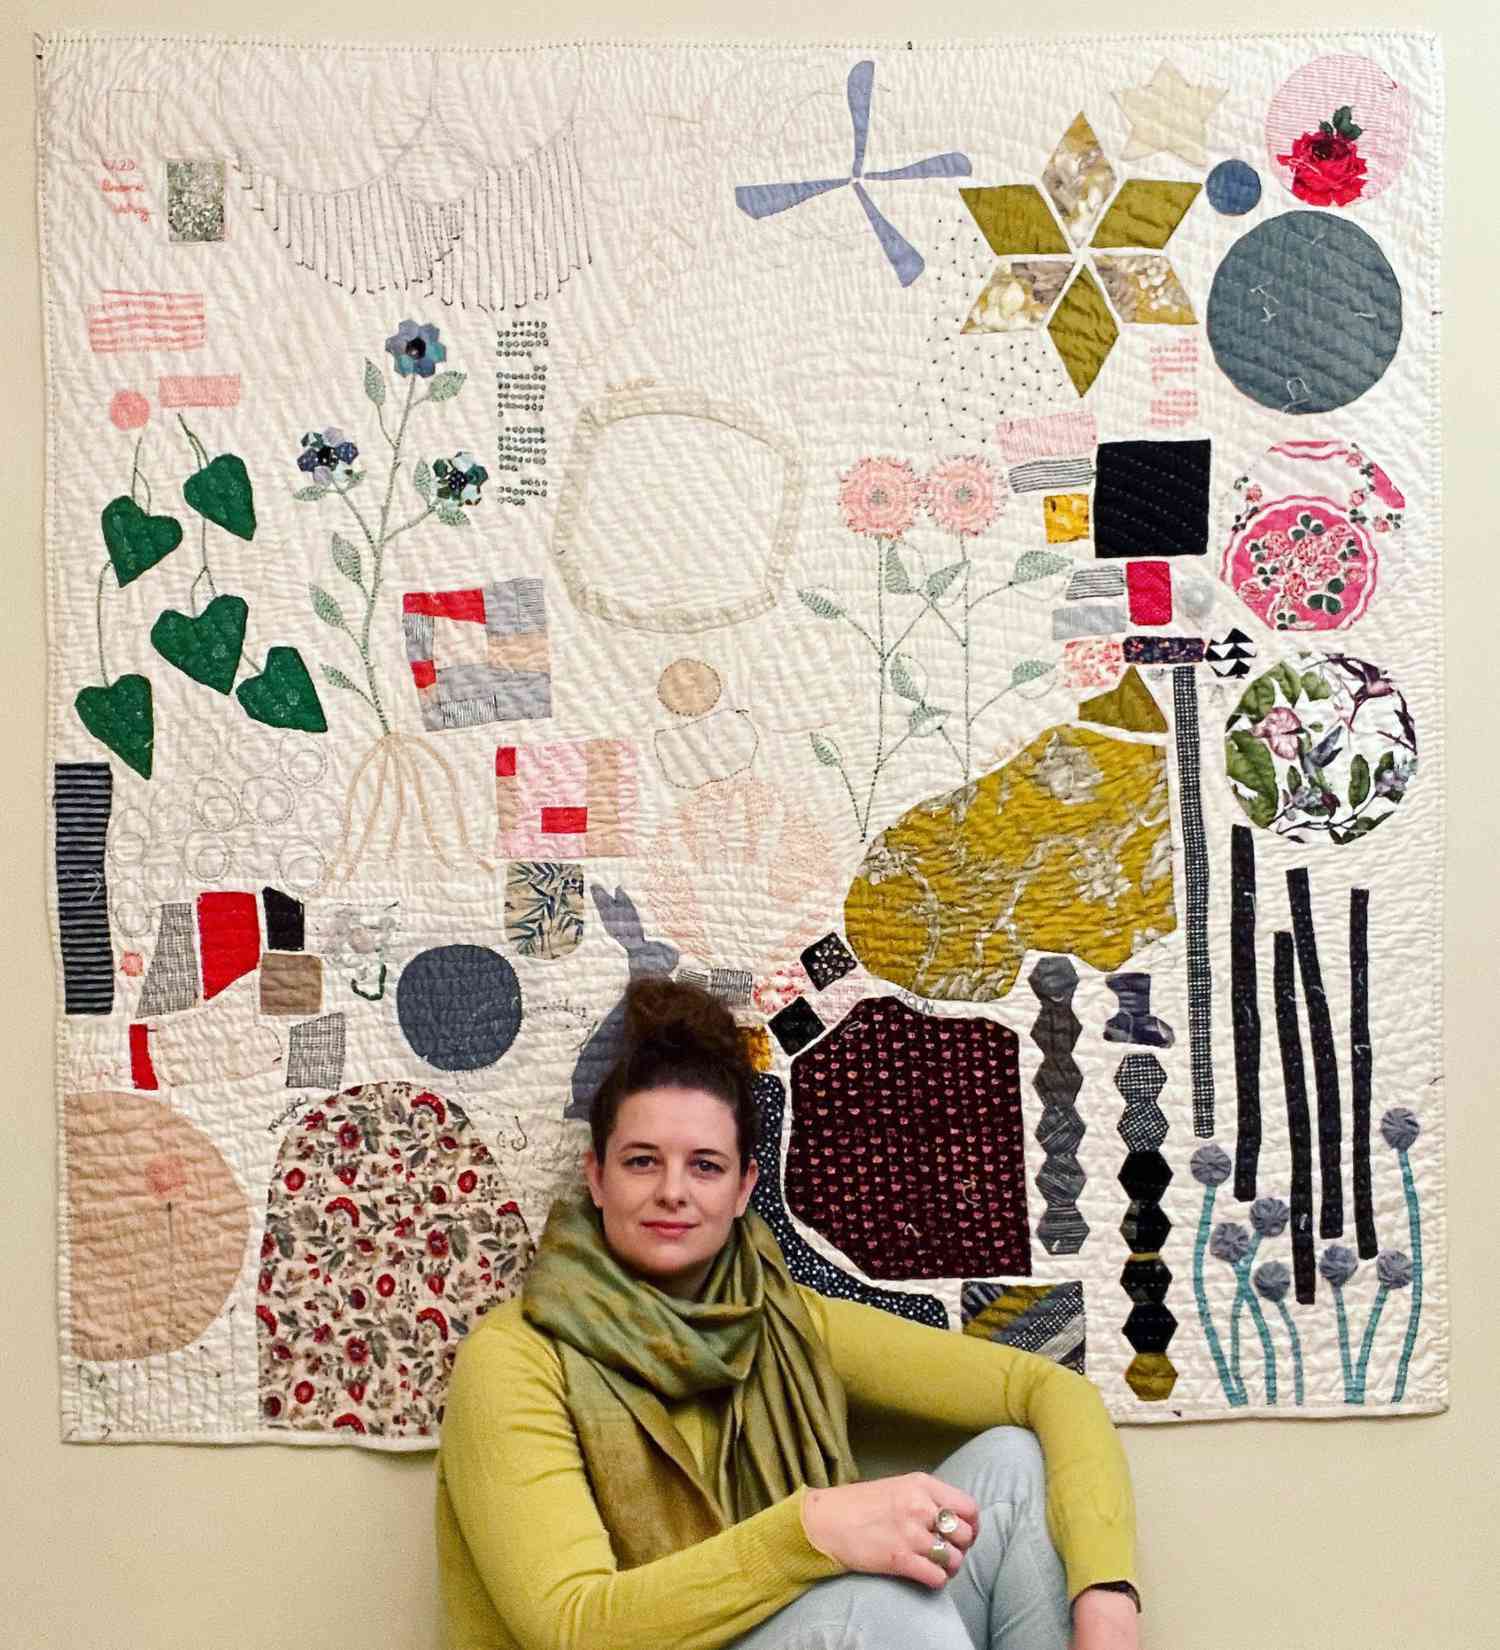 Heidi Parkes portrait sitting in front of quilt